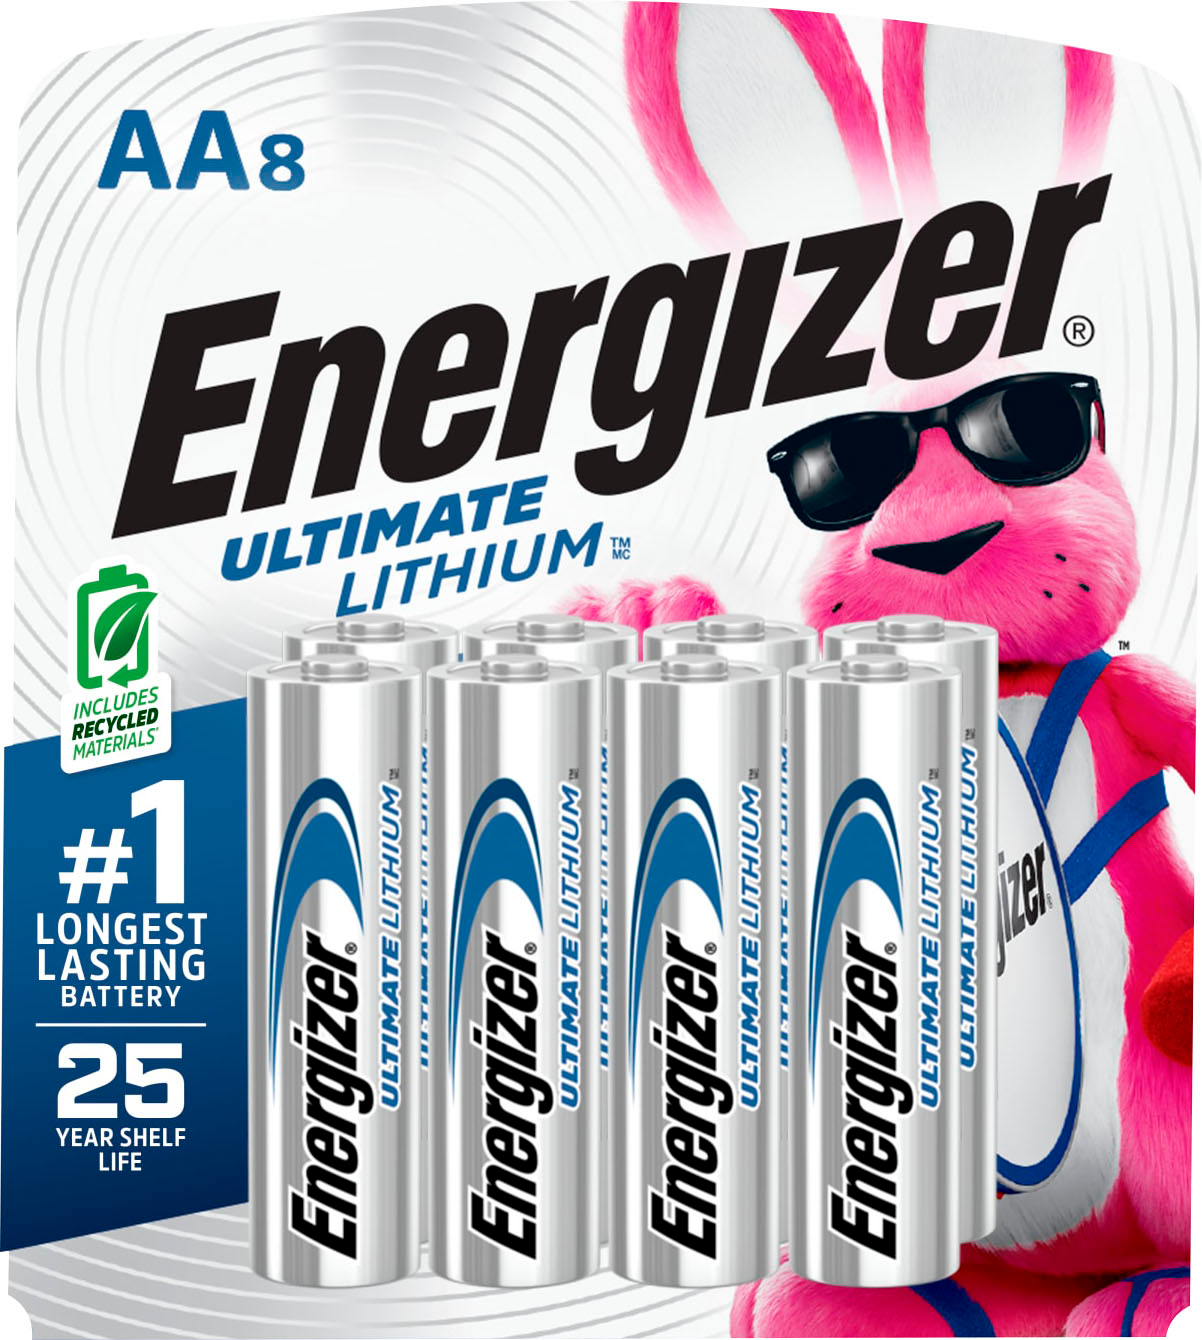 Energizer Ultimate Lithium Batteries, Alkaline, AA - 8 batteries